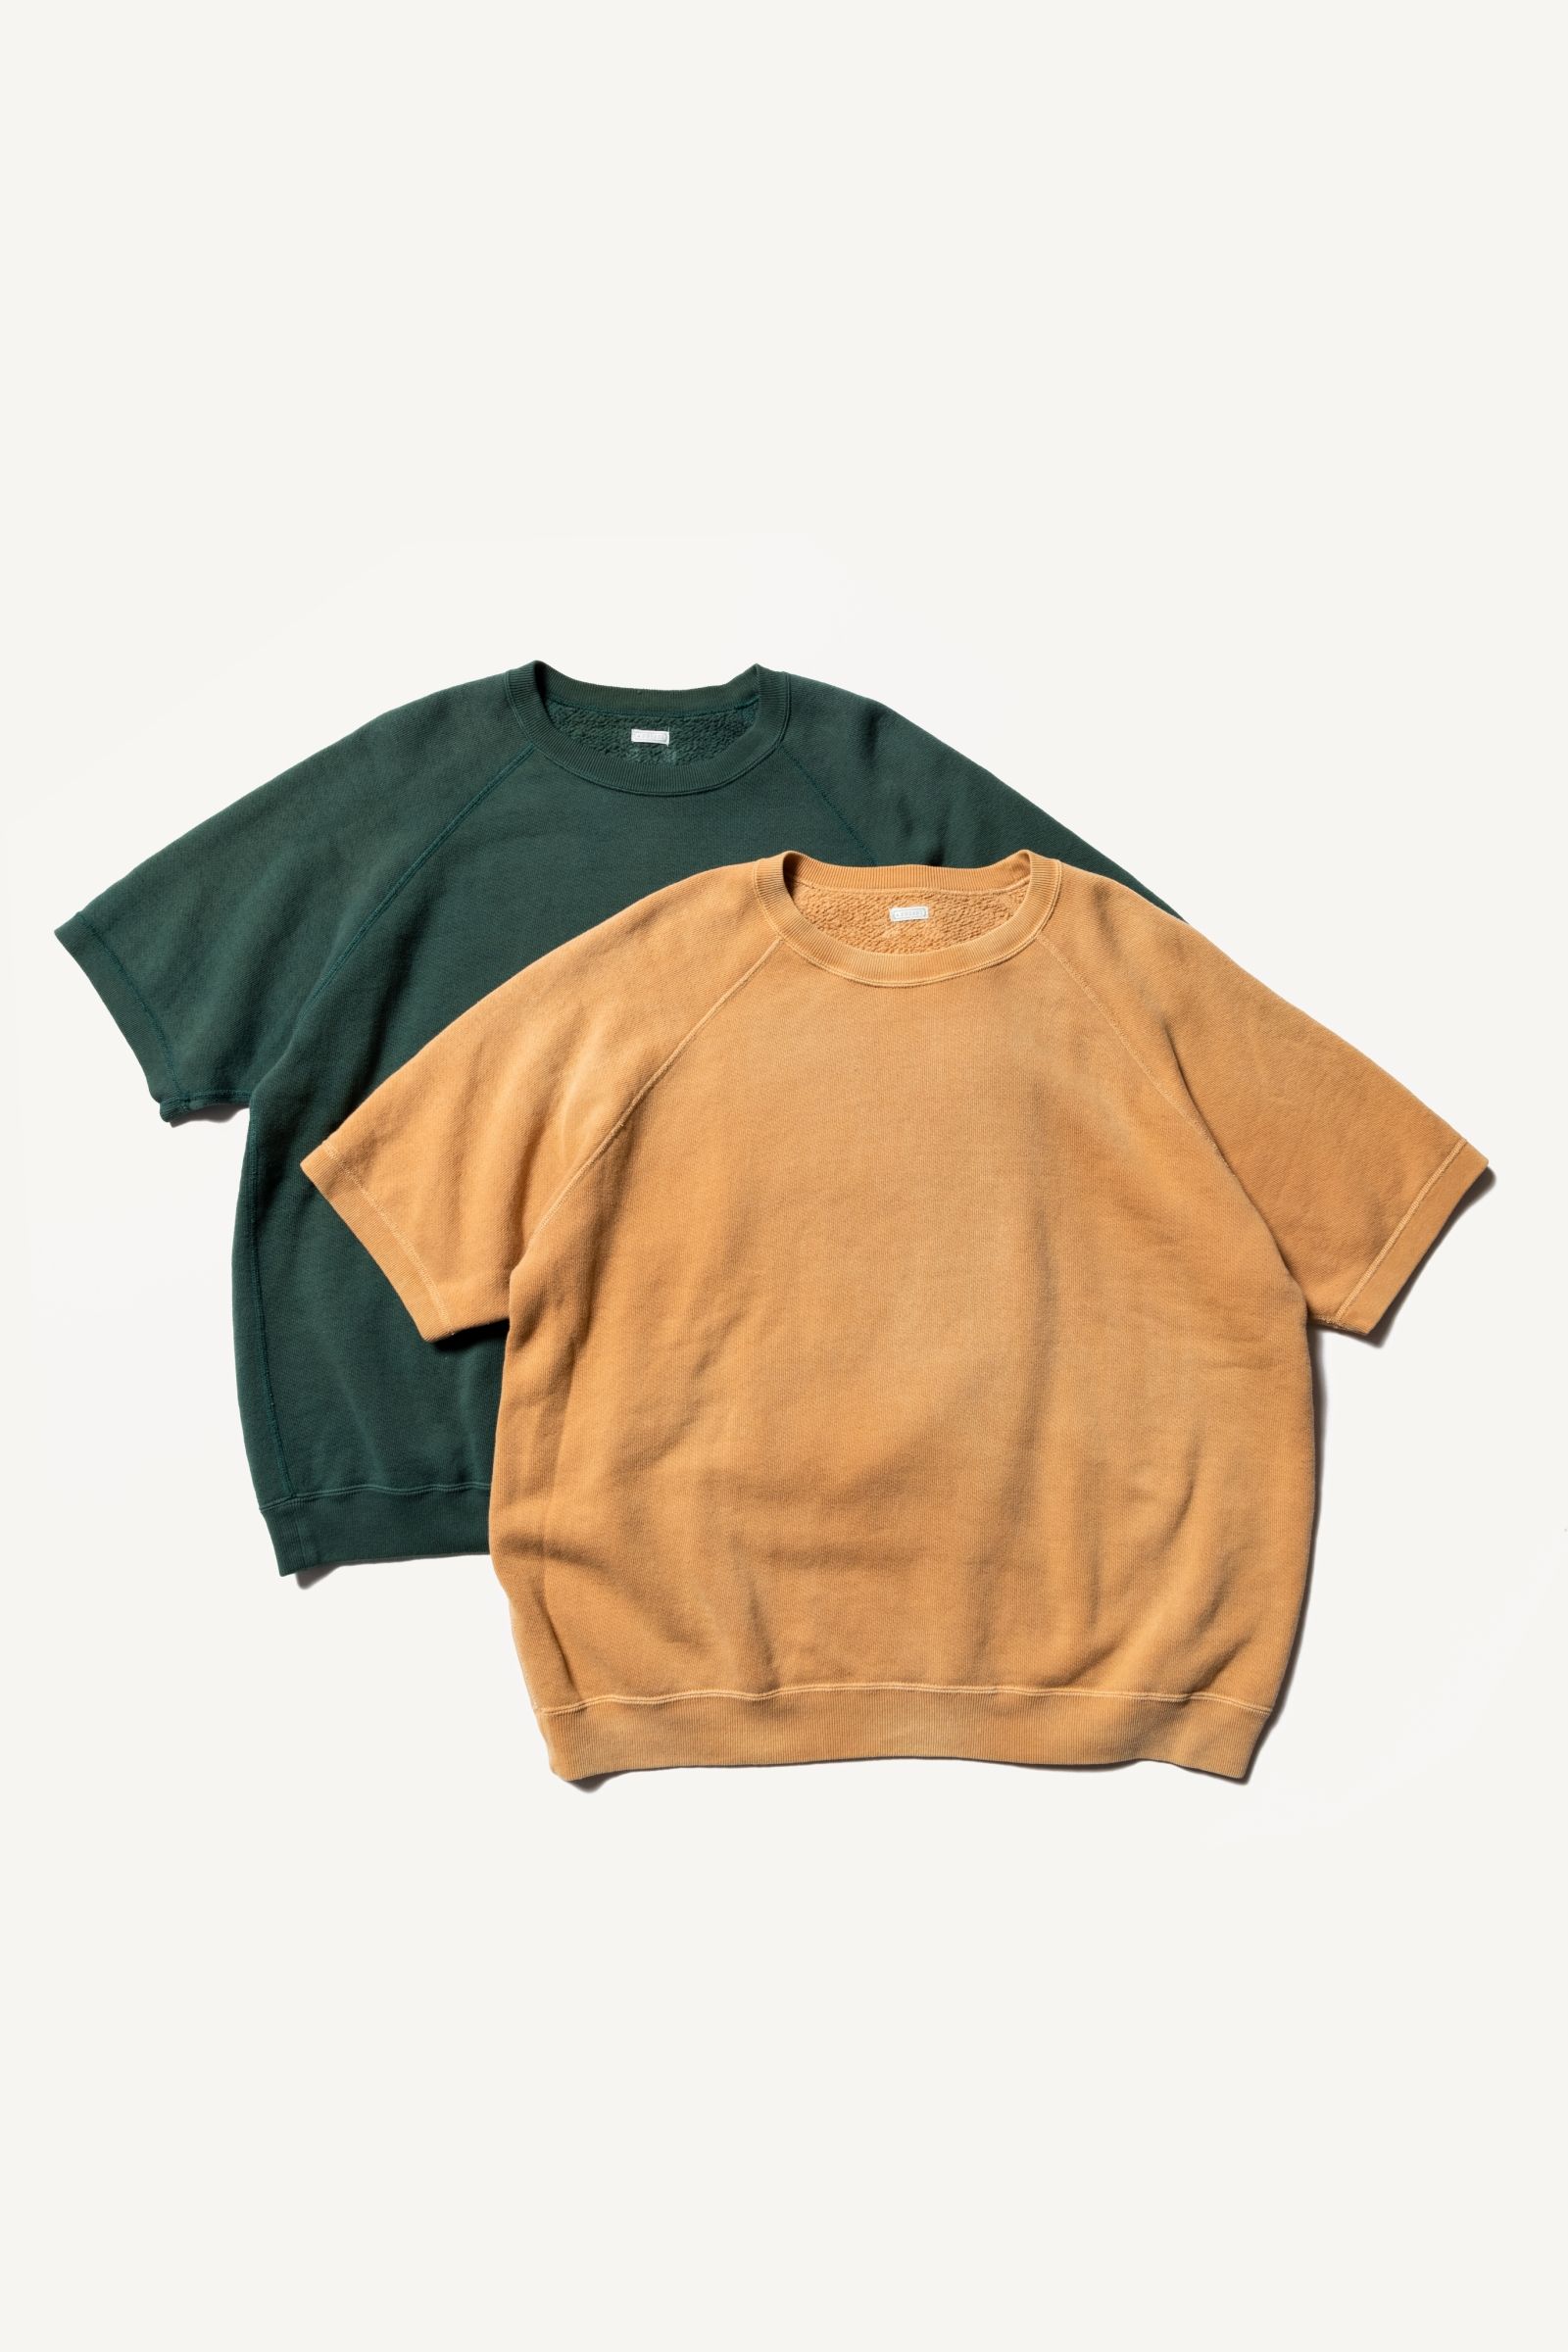 【A.PRESSE/アプレッセ】Vintage Sweatshirt